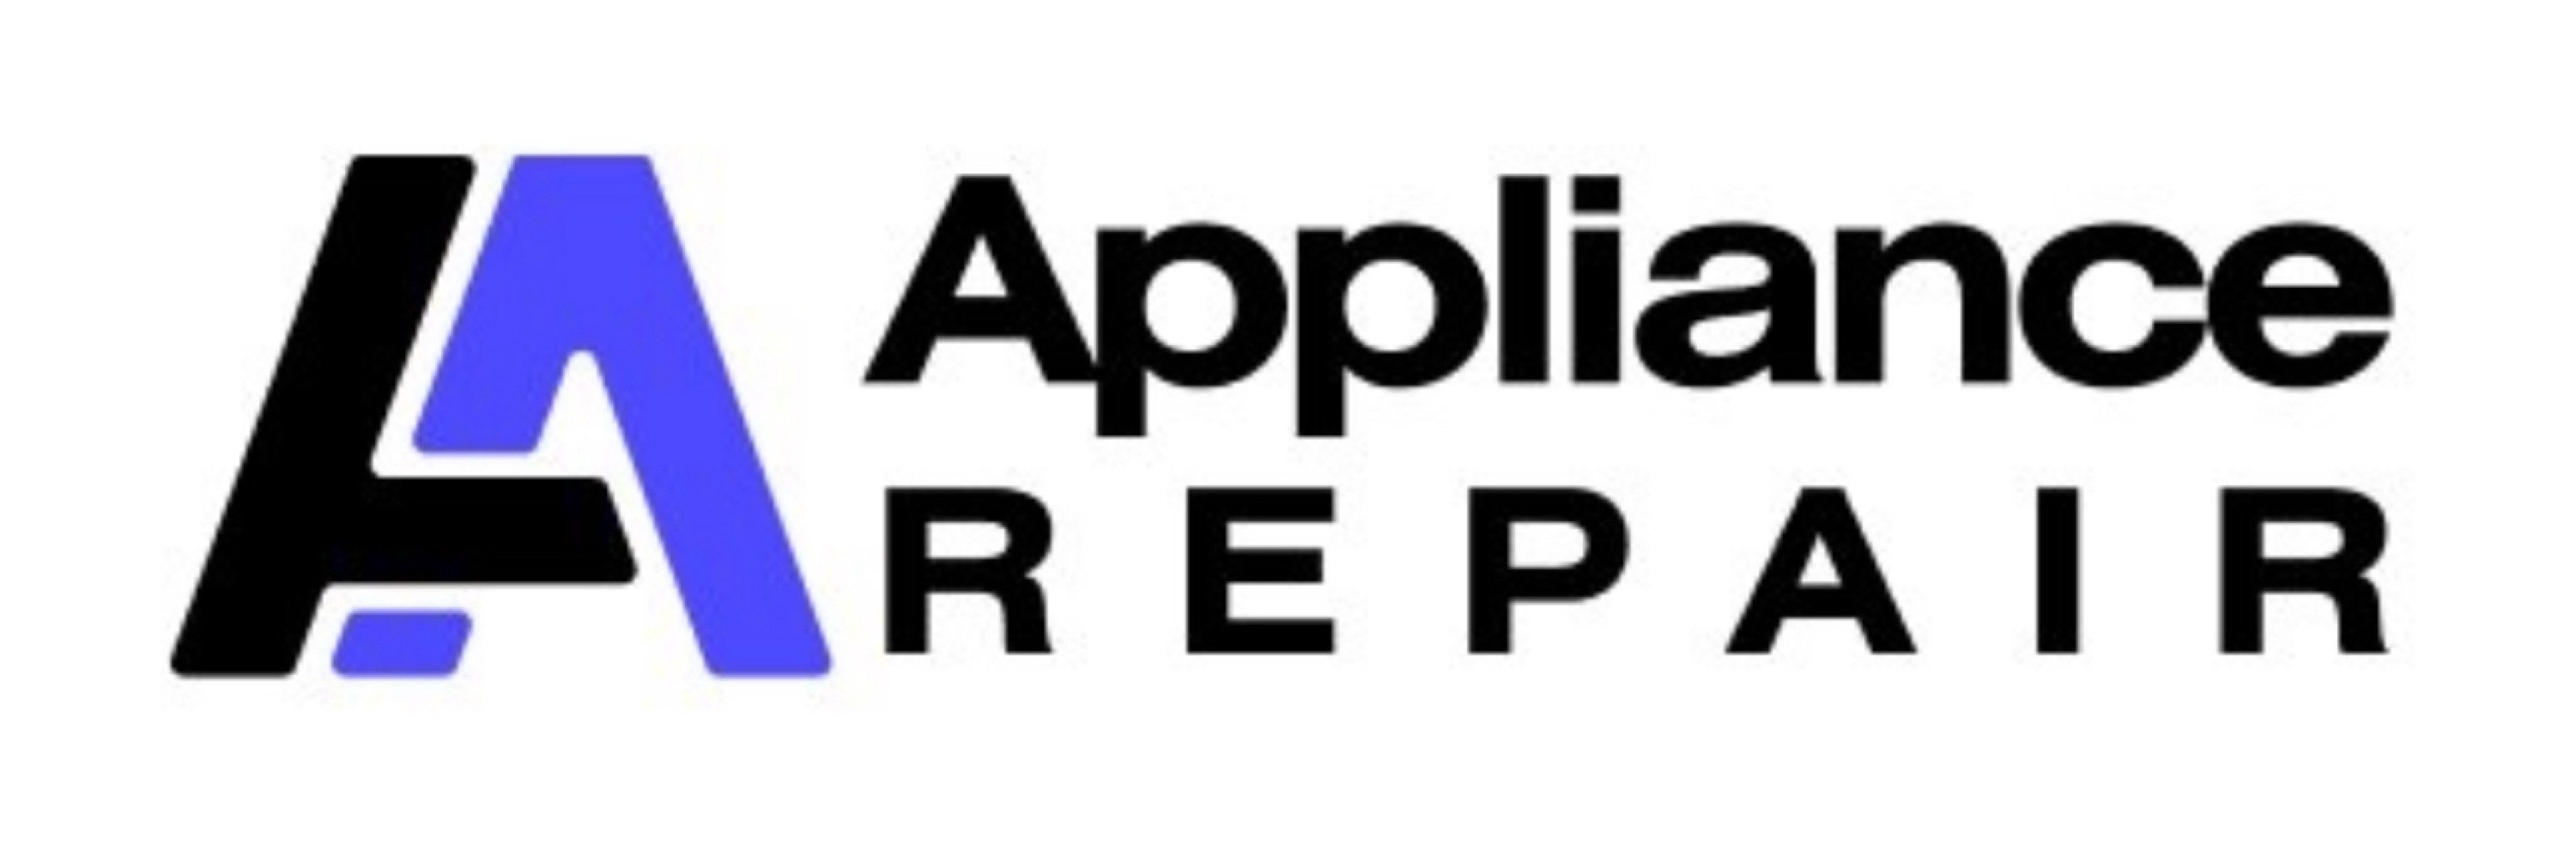 AA Appliance Repair Service Logo